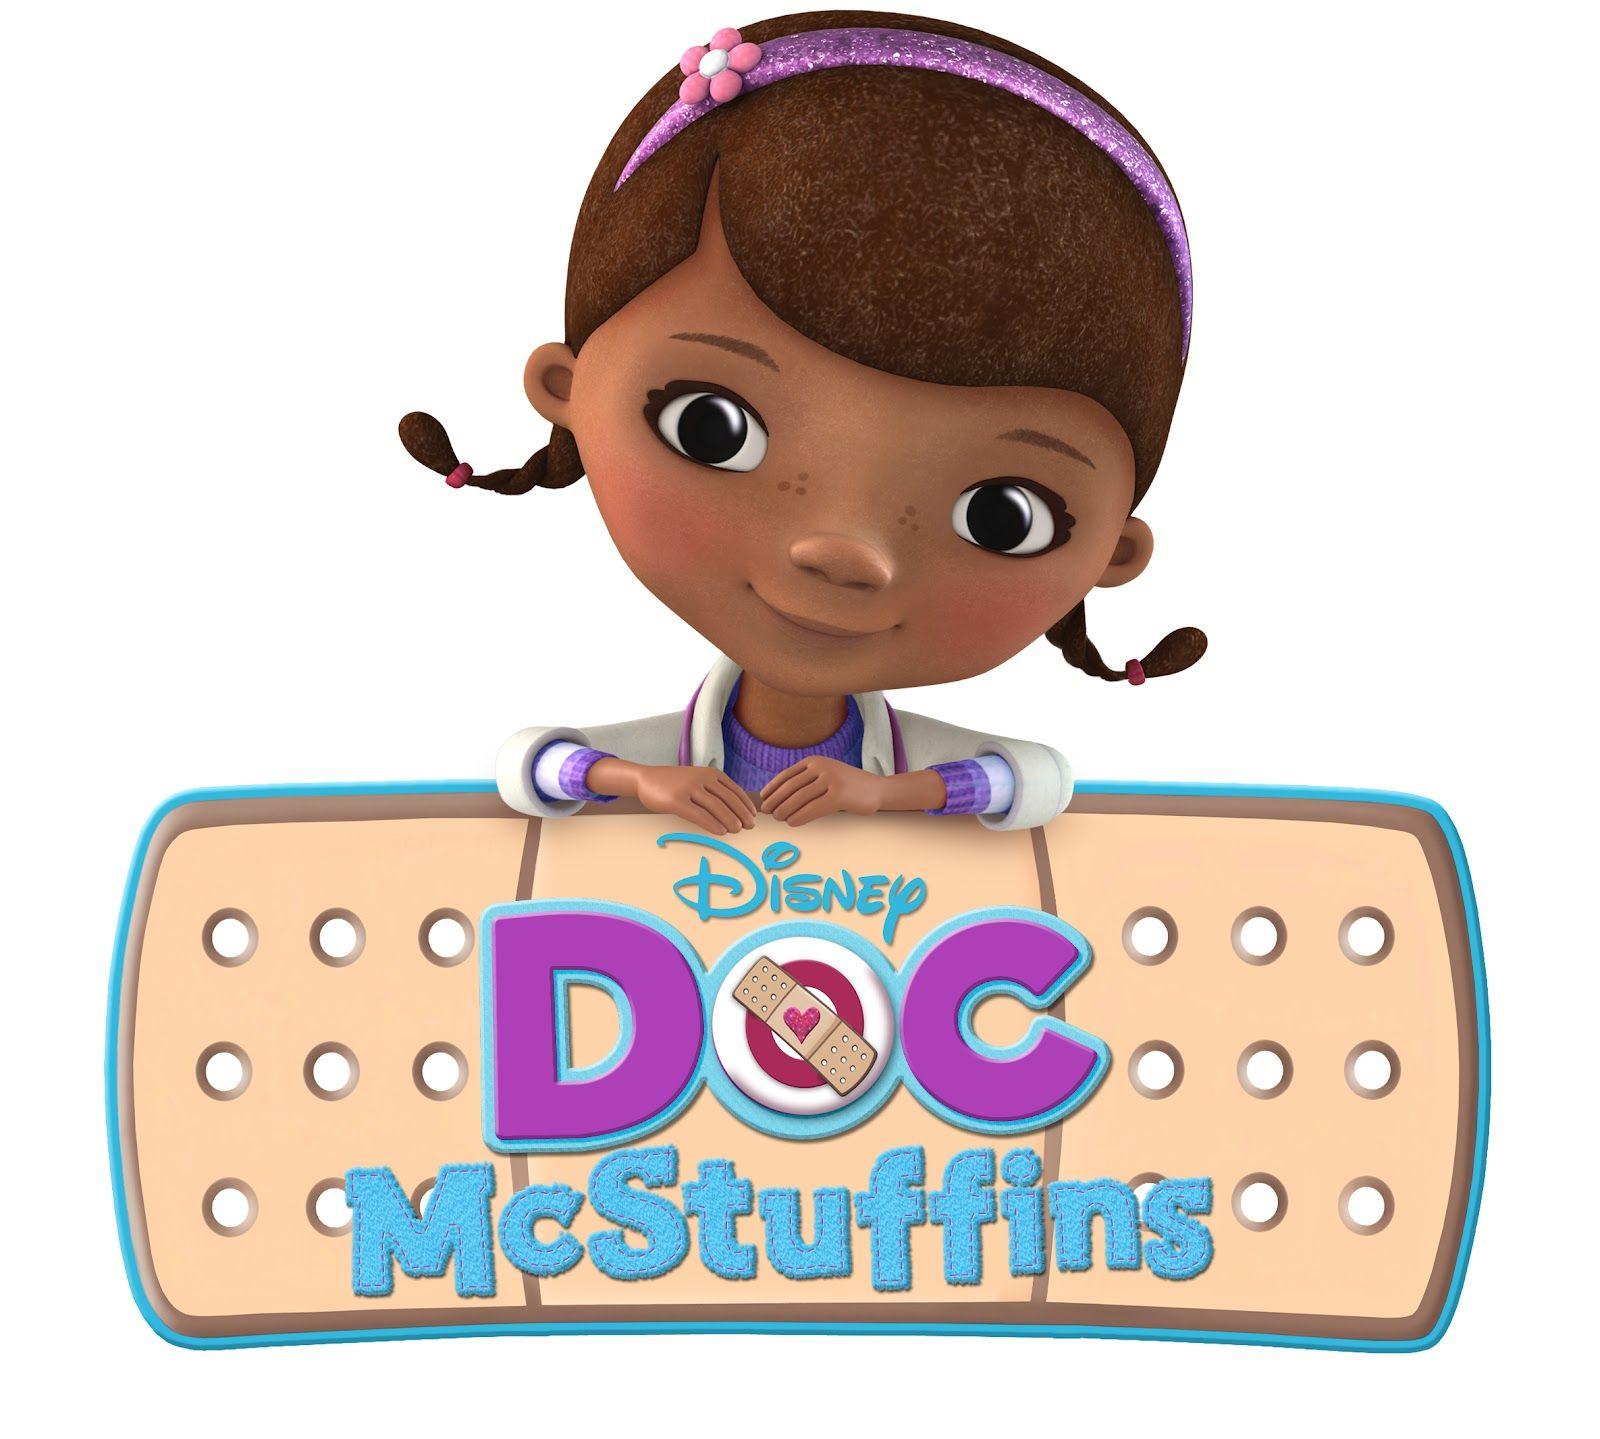 Disney Doc McStuffins Wallpaper XXL. Great KidsBedrooms